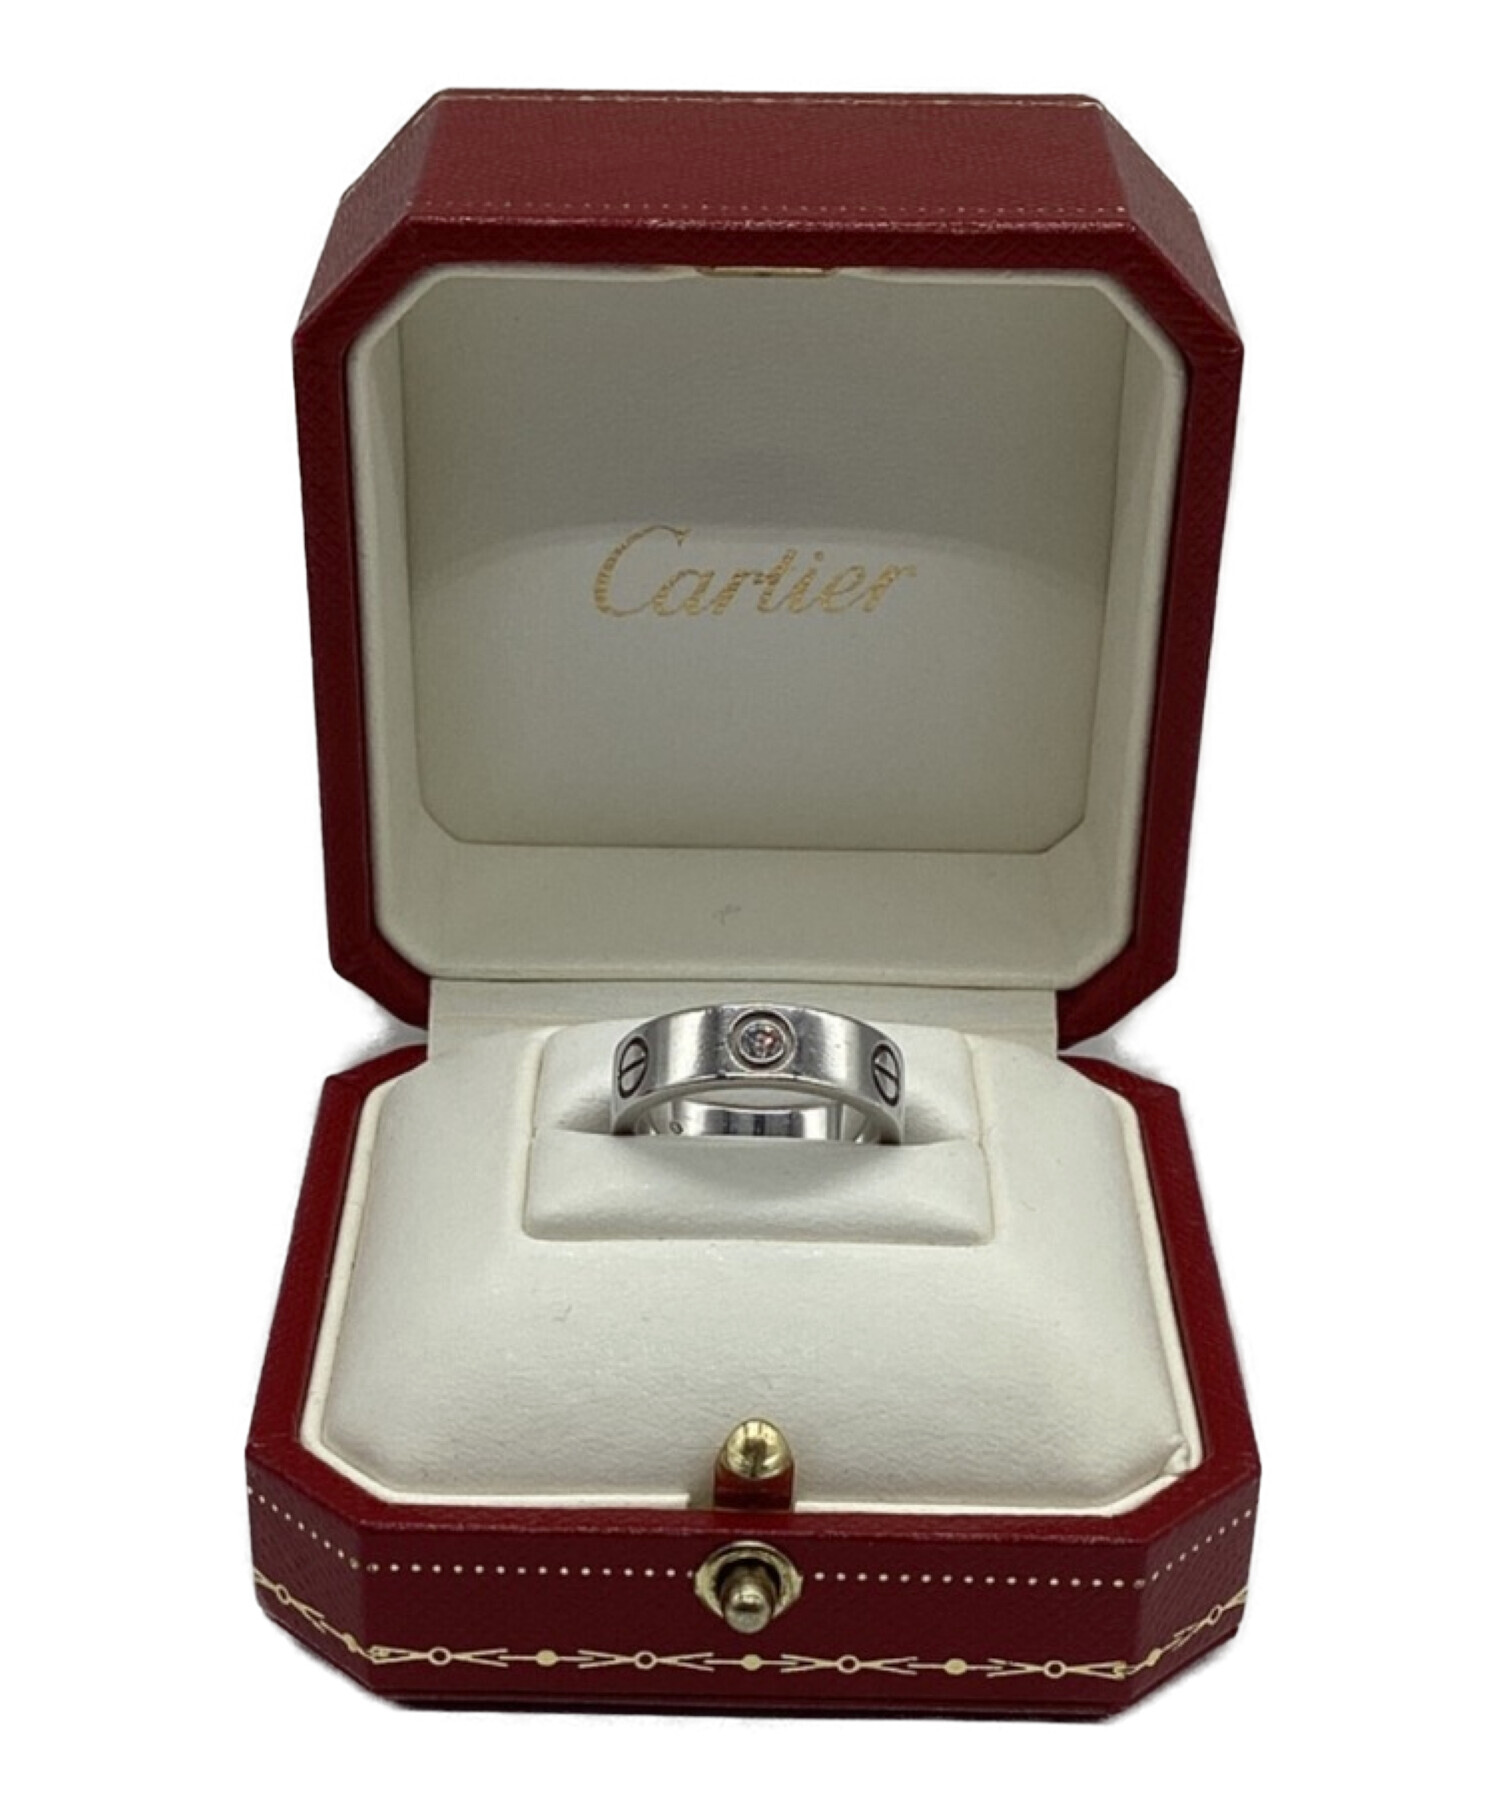 Cartier (カルティエ) リング サイズ:7号